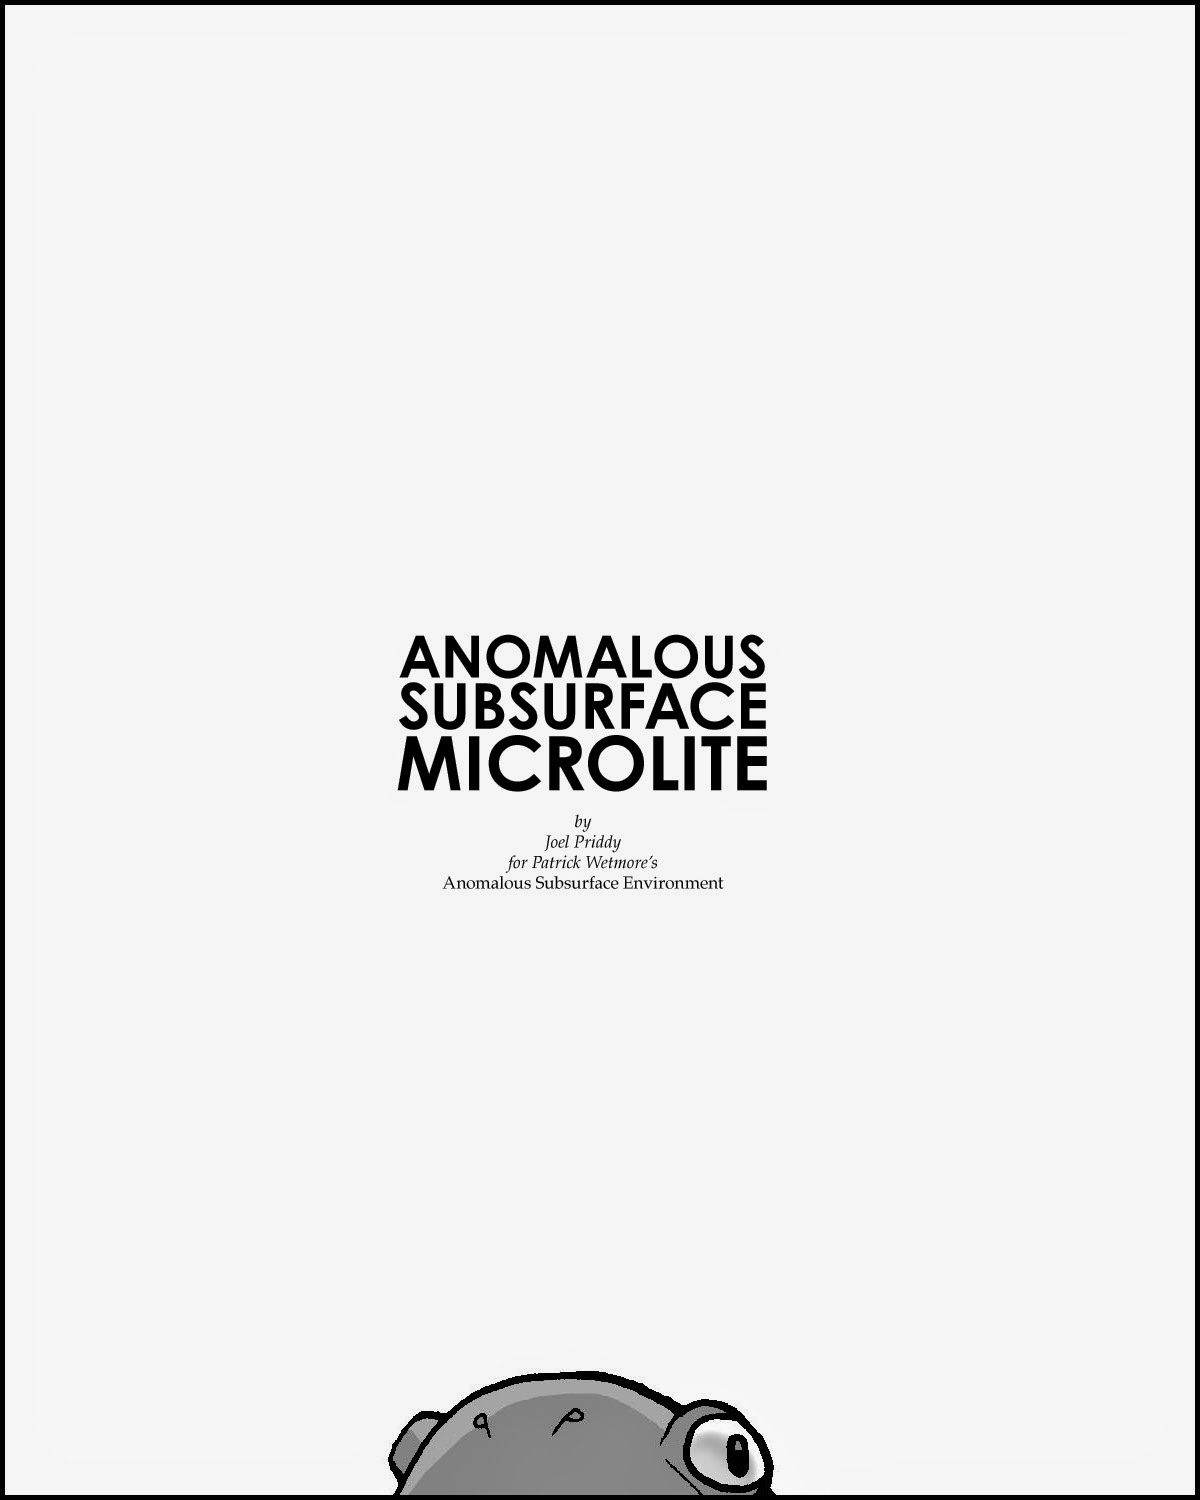 Anomalous Subsurface Microlite